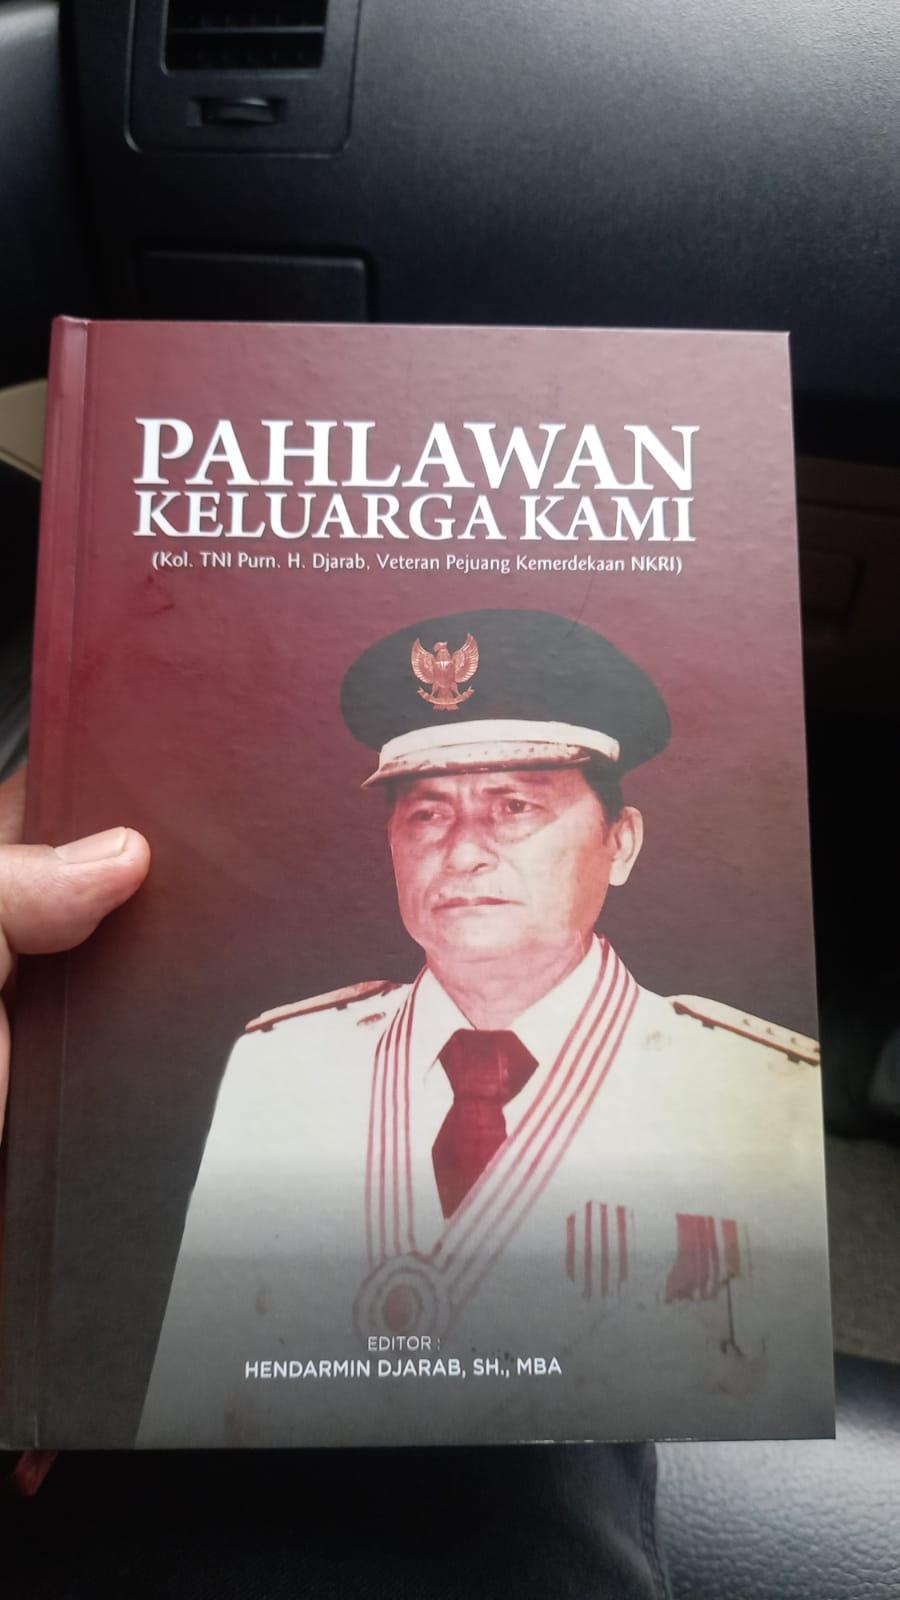 Launching Biografi Kolonel Djarab, Pejuang Kemerderkaan Asal Pagar Alam yang Menjabat Bupati Bangka 2 Periode